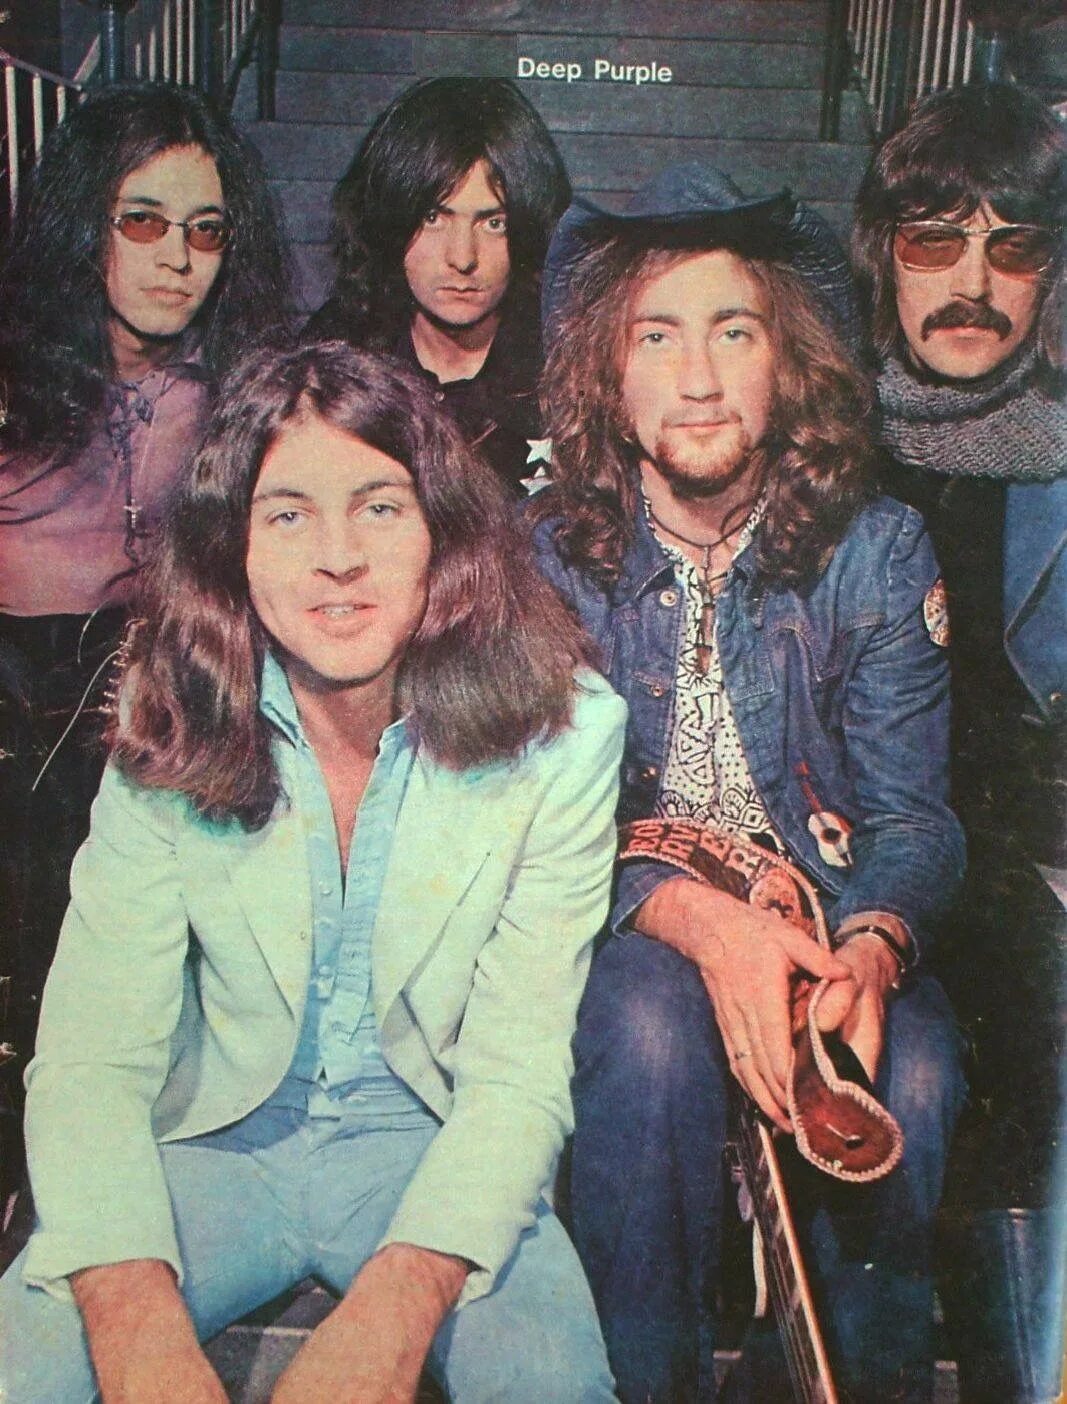 Ди перпл. Группа дип перпл. Группа Deep Purple 1970. Группа дип перпл 1970. Дип перпл (Deep Purple).